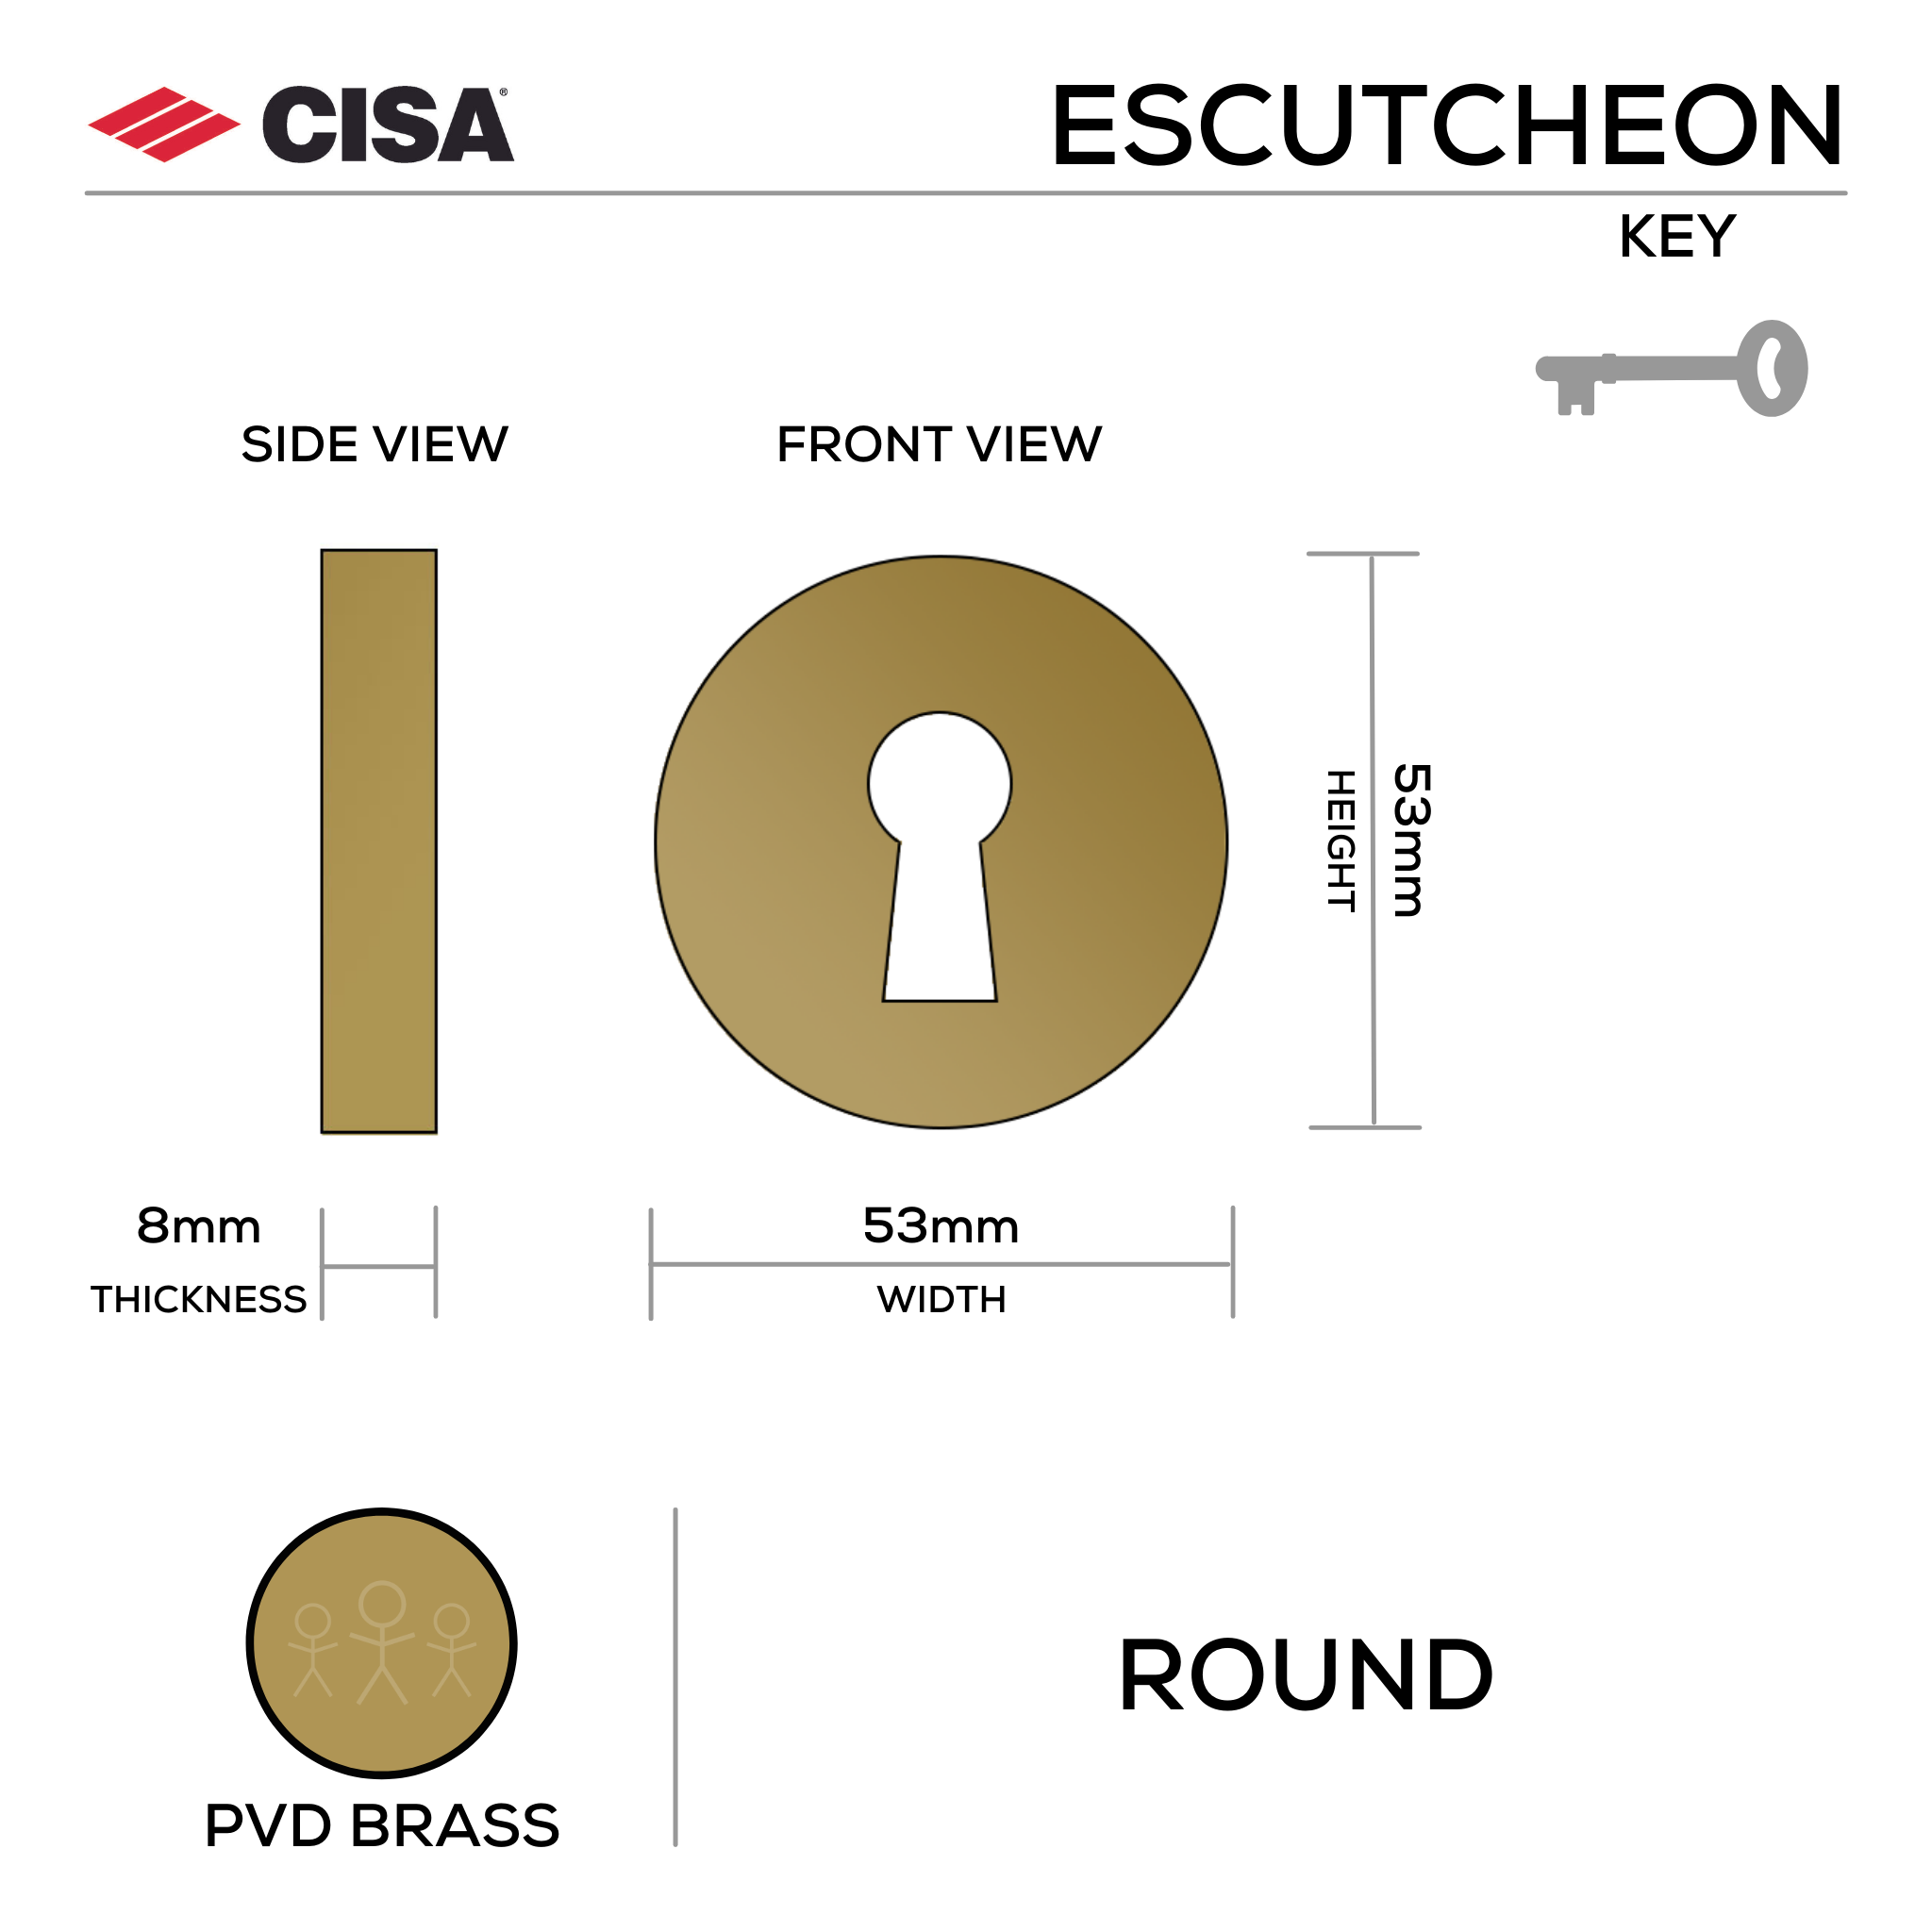 FE.R.K.SB, Keyhole Escutcheon, Round Rose, 53mm (h) x 53mm (w) x 8mm (t), PVD Brass, CISA